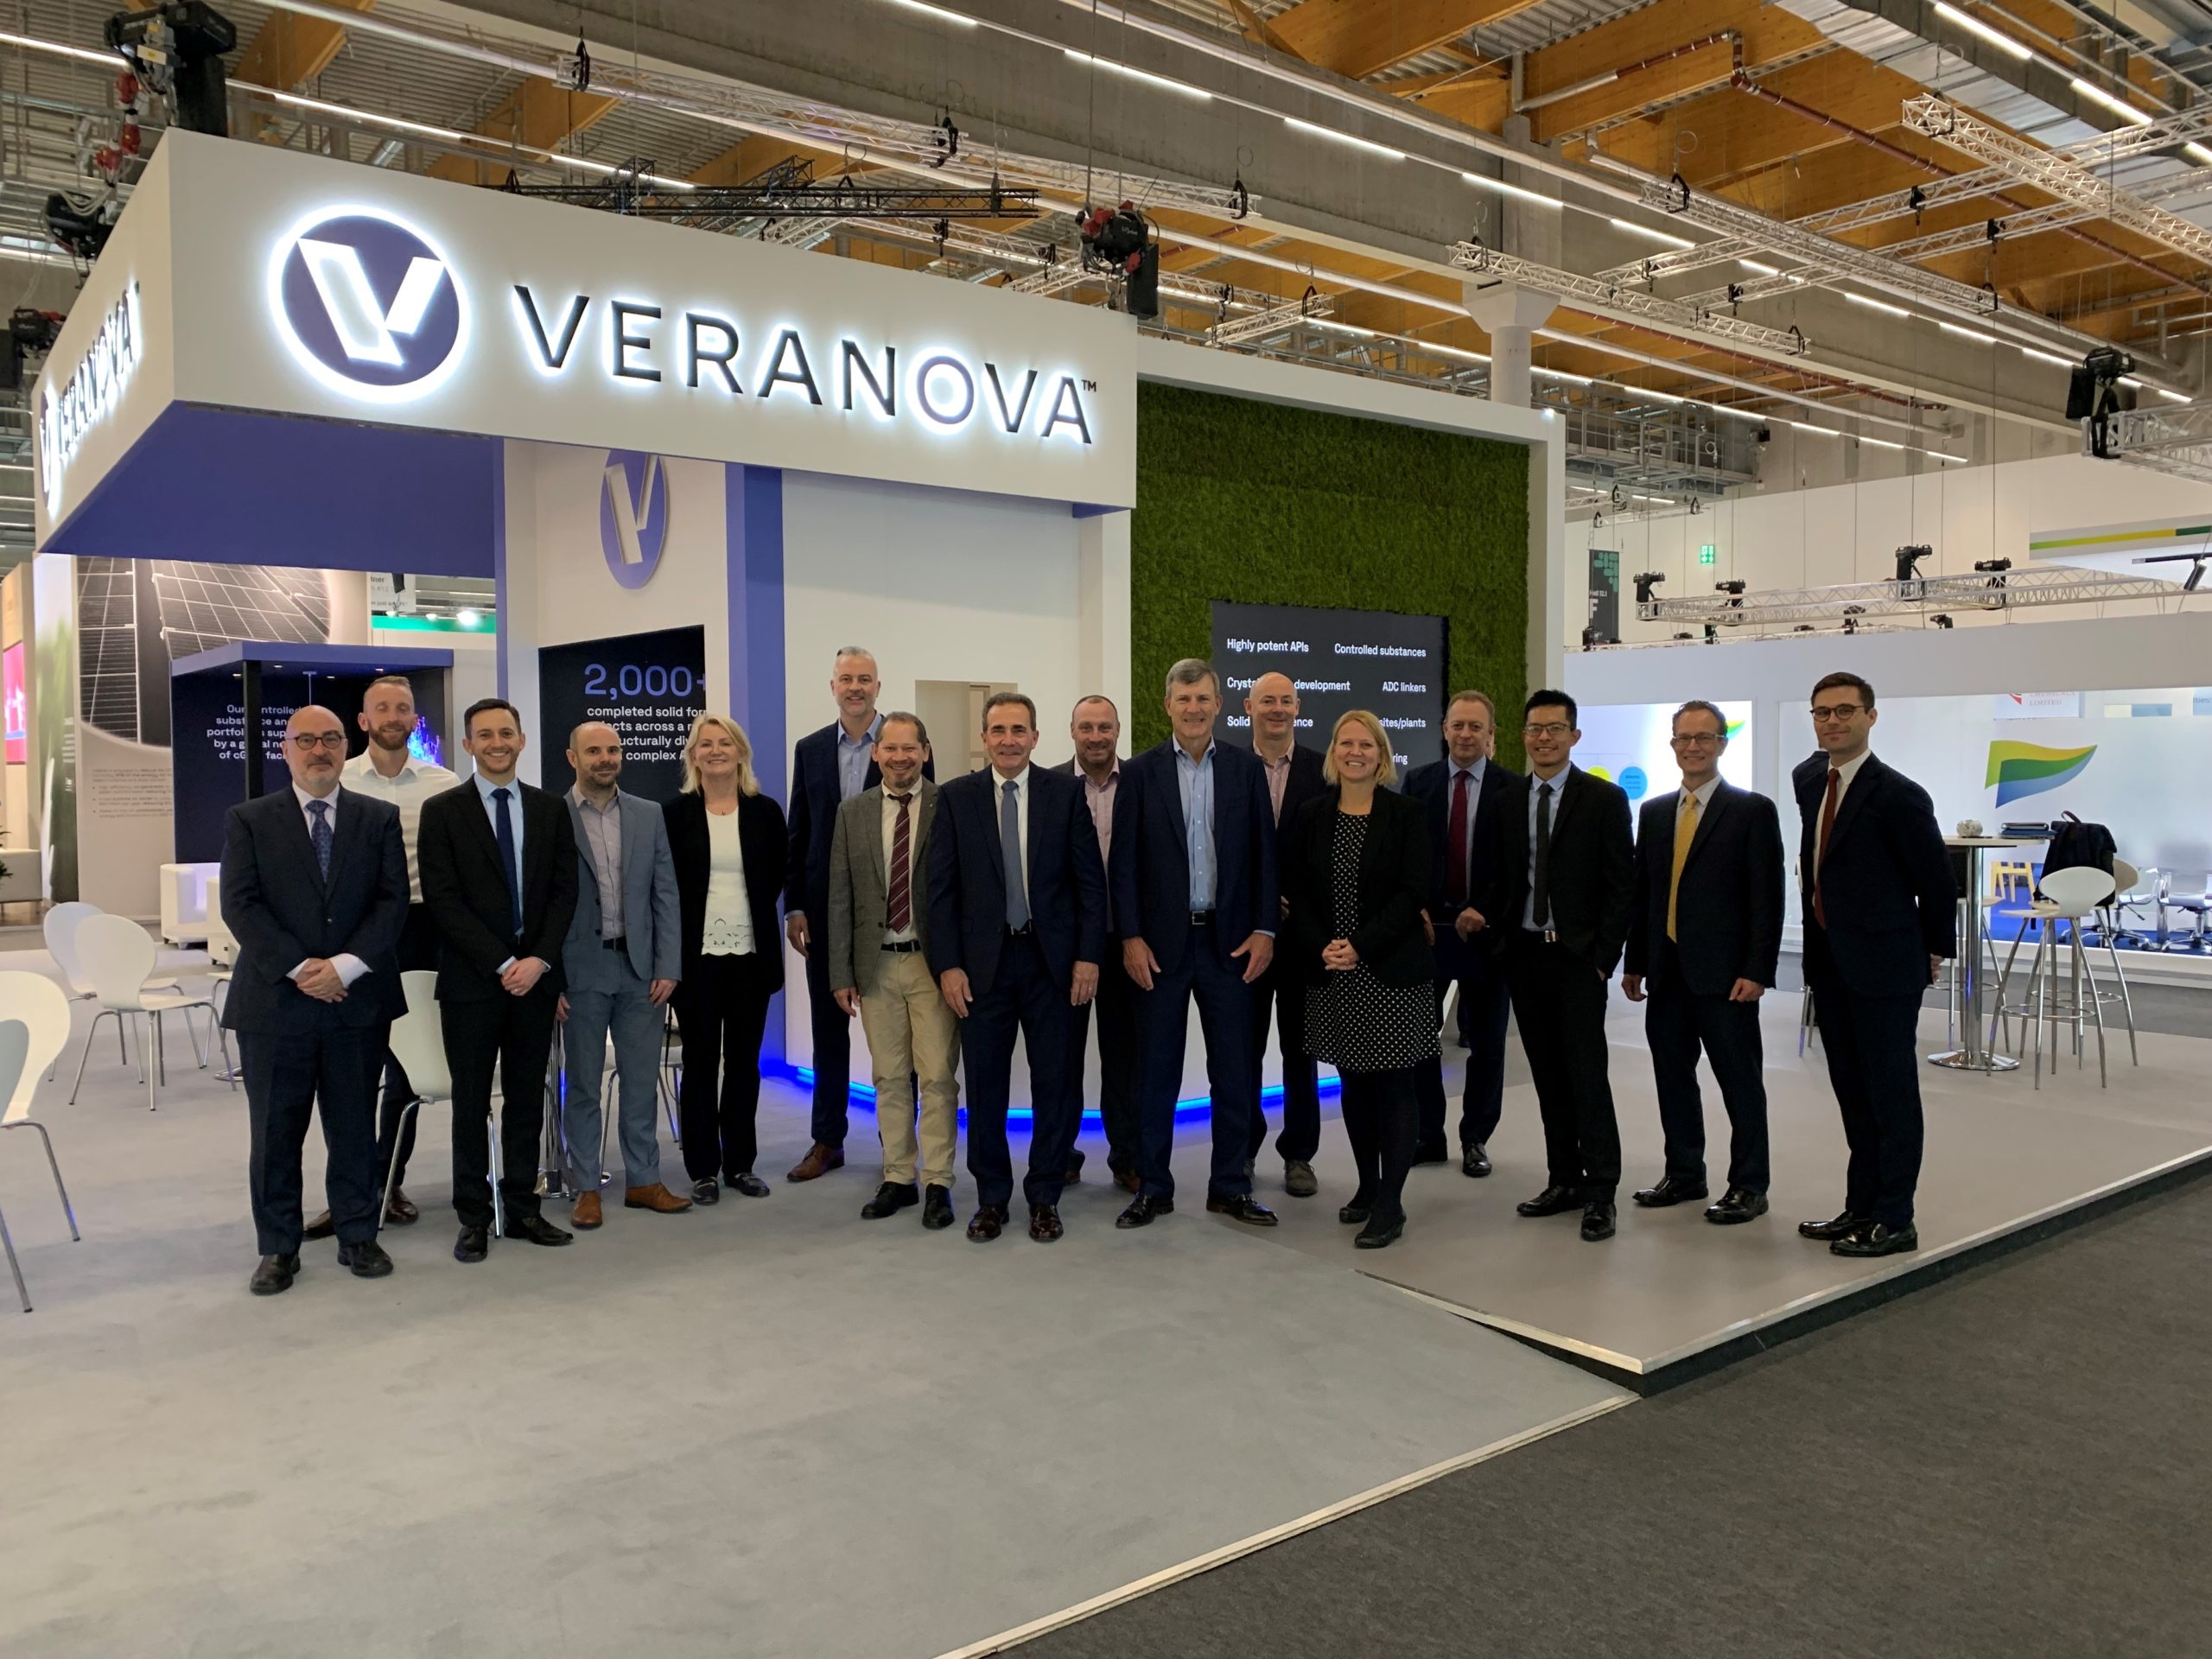 The Veranova team